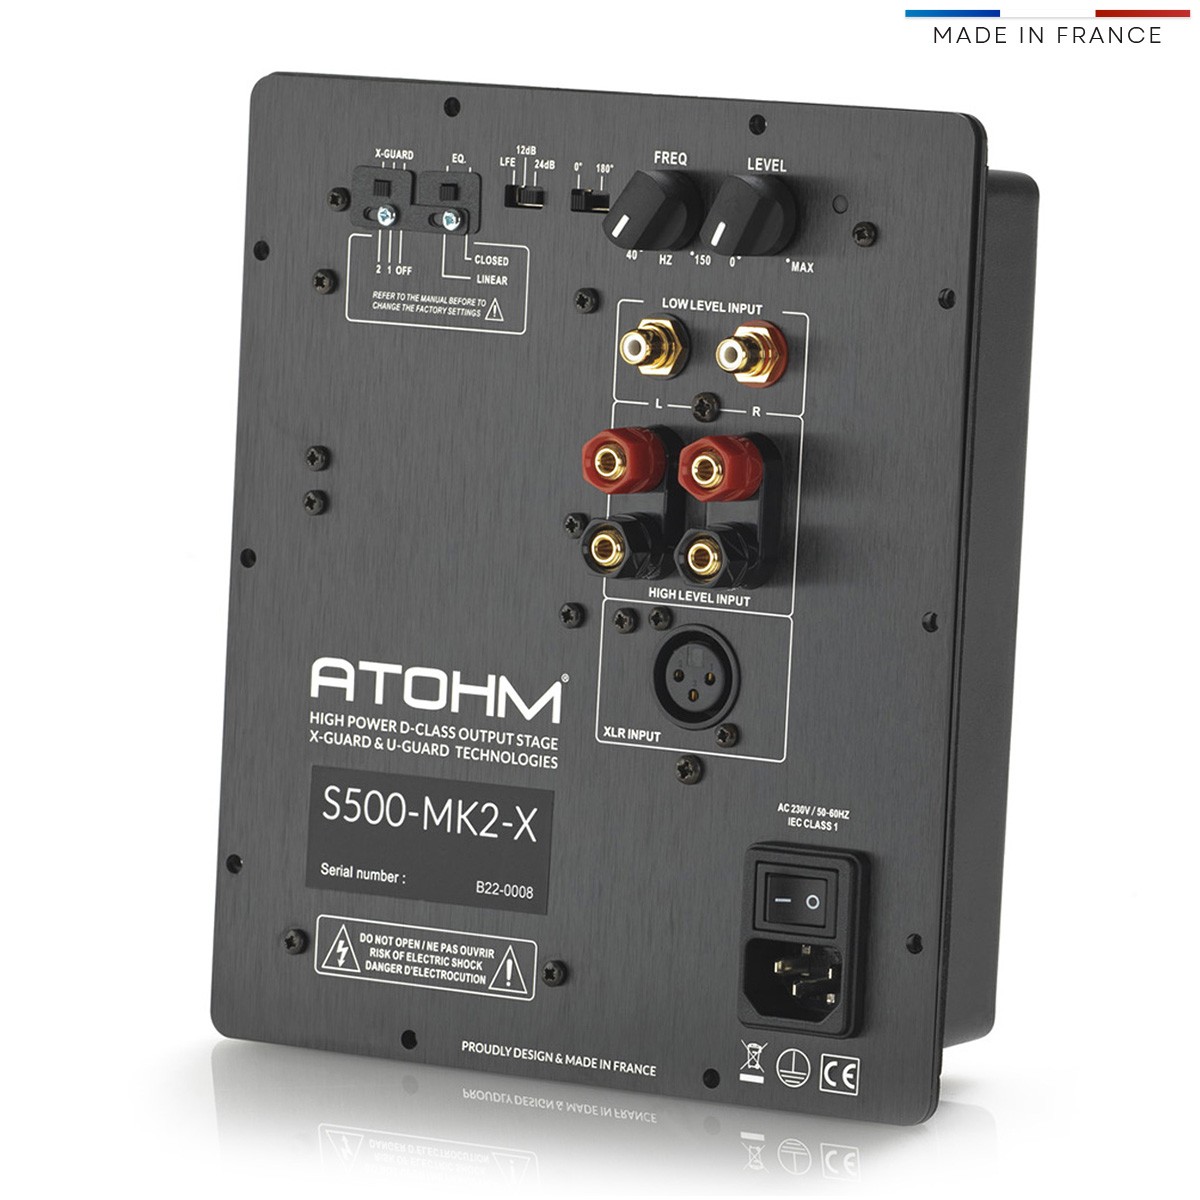 ATOHM S500-MK2-X ICE POWER Class D Amplifier Module Subwoofer 500W 4Ω